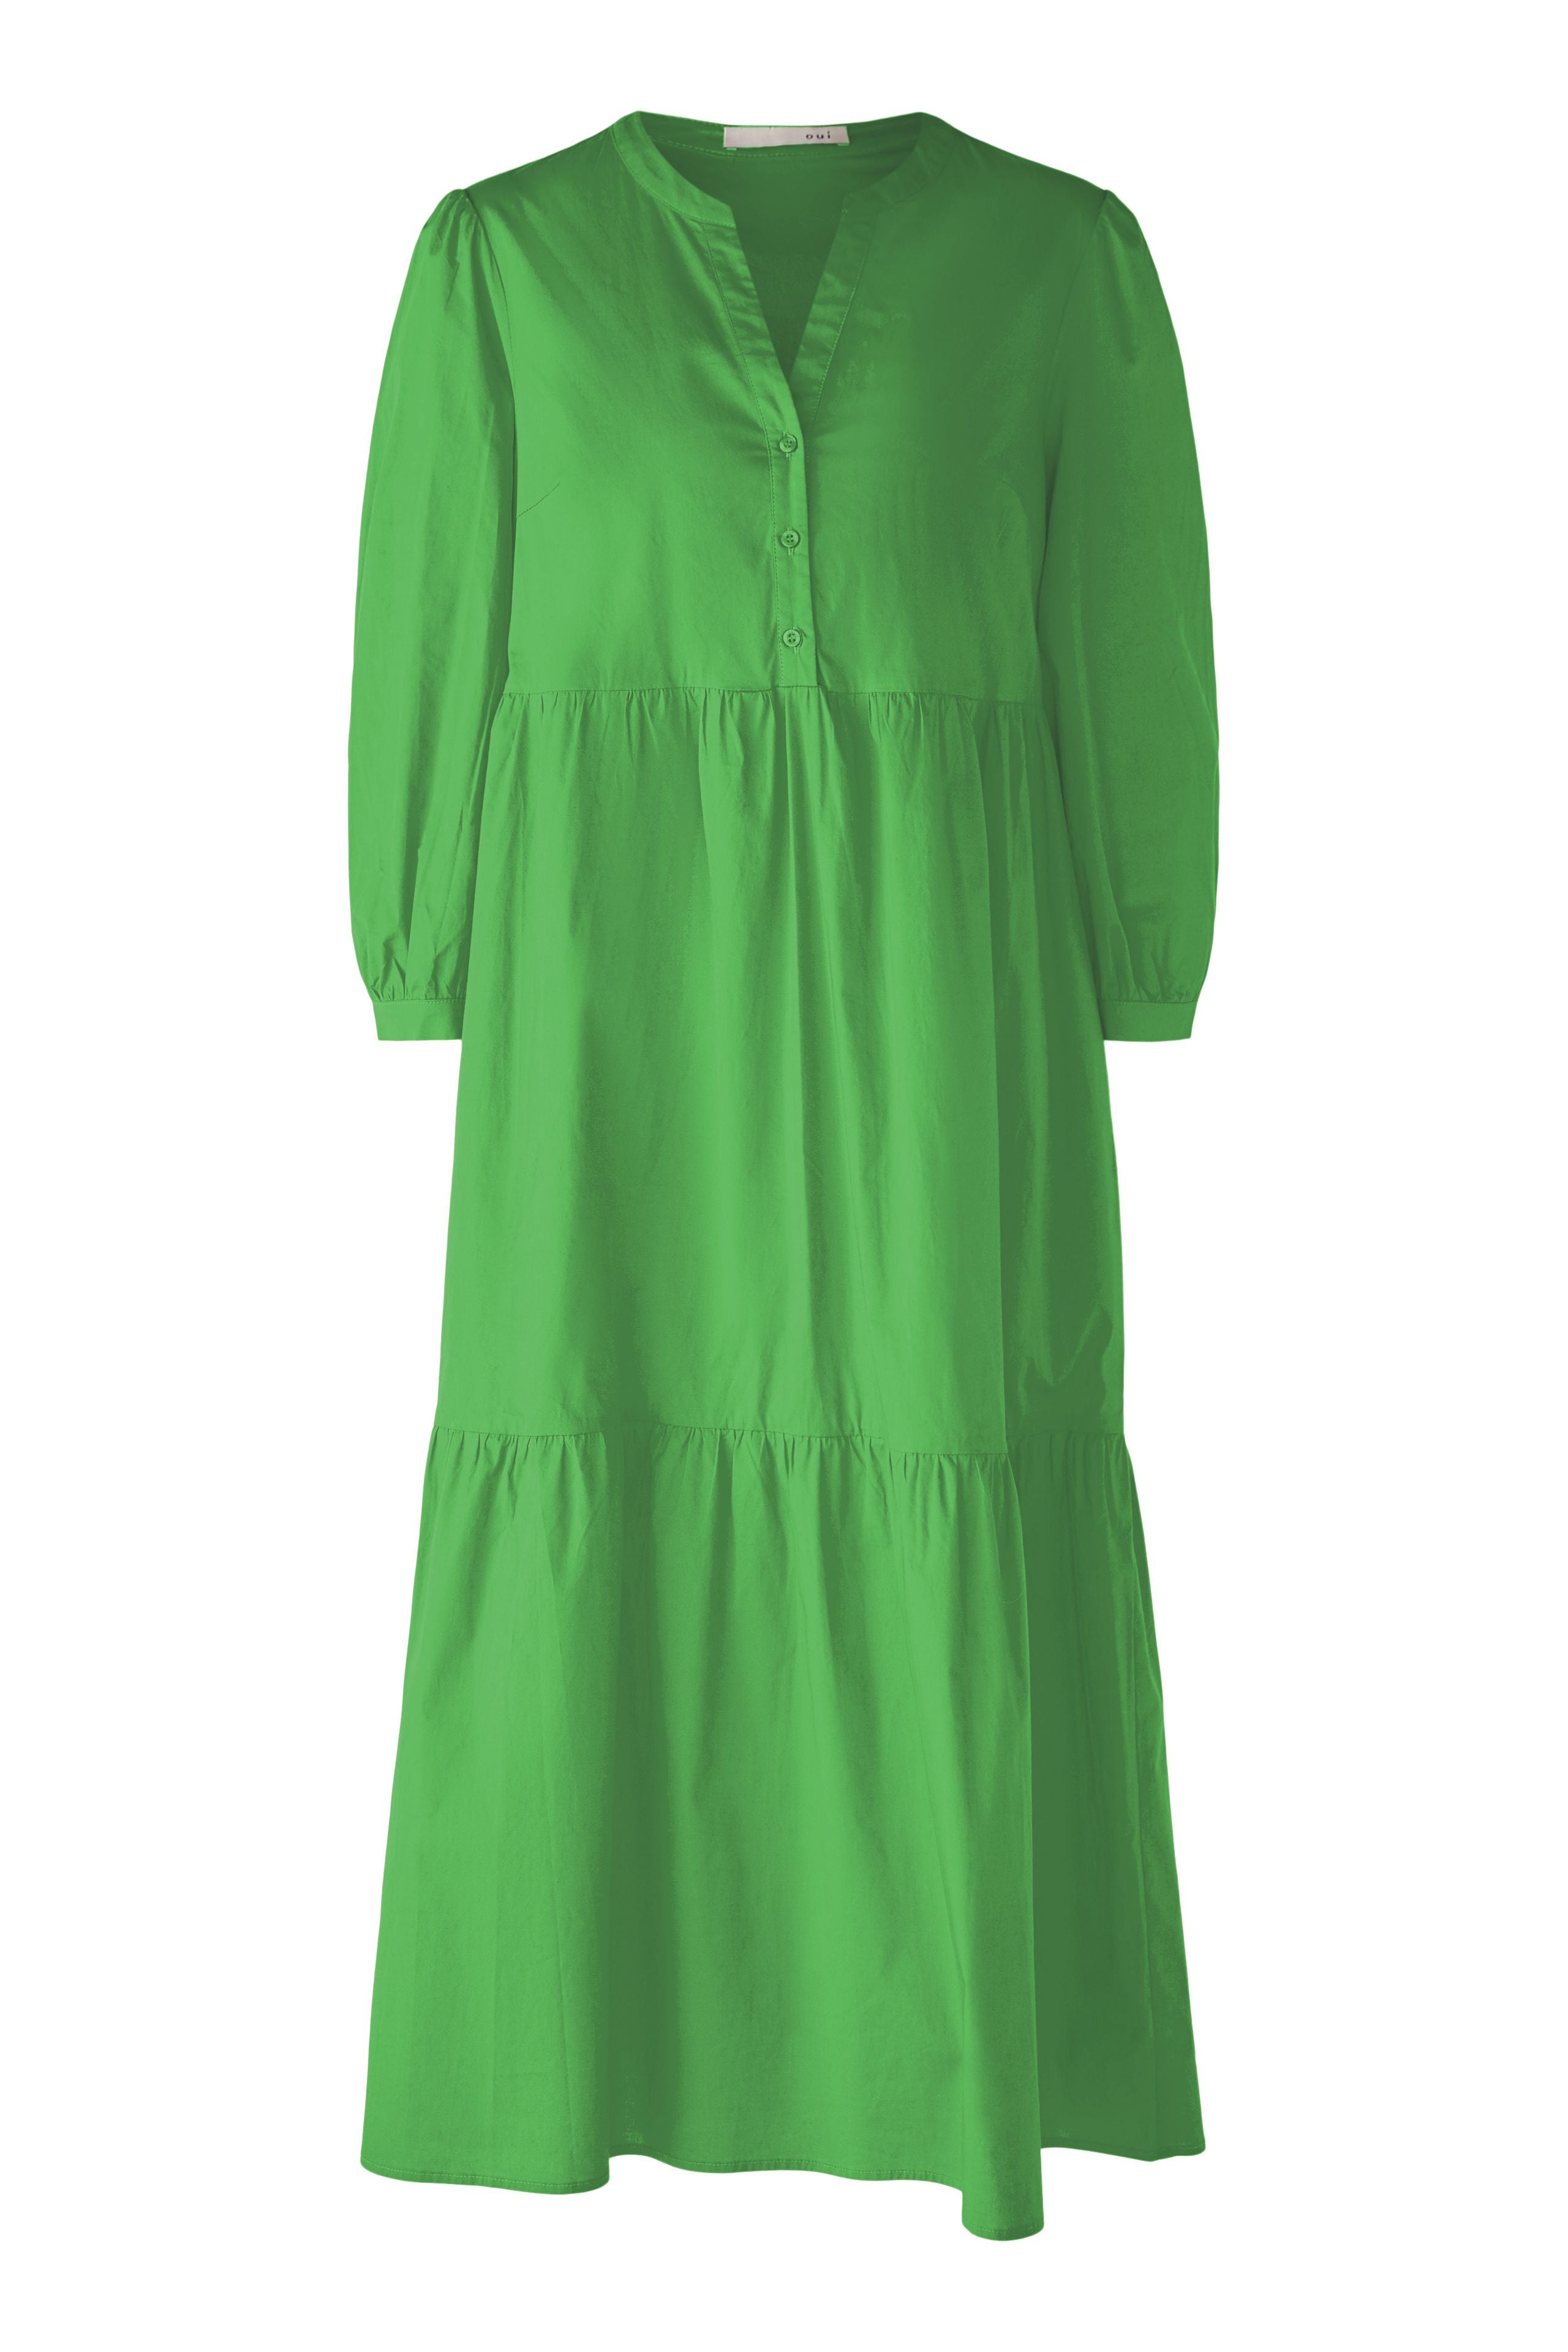 Green Midi Dress In Cotton Blend